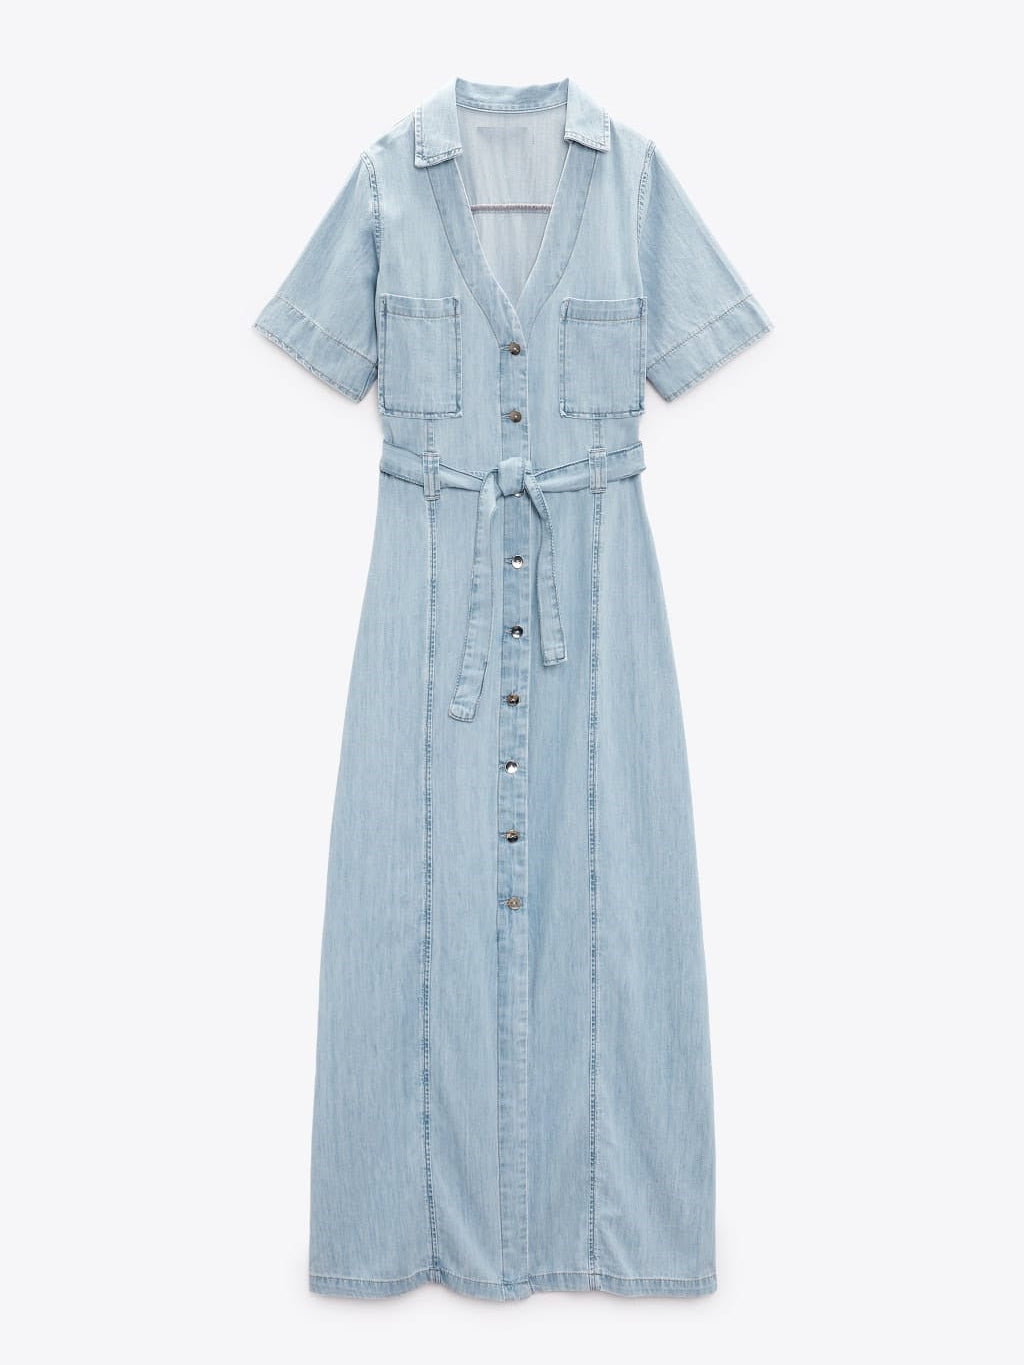 Buy KDF Denim Shirt Dress Women - Denim Dress for Women with Pockets Denim  Button Down Shirt Dress, Medium Blue, L at Amazon.in